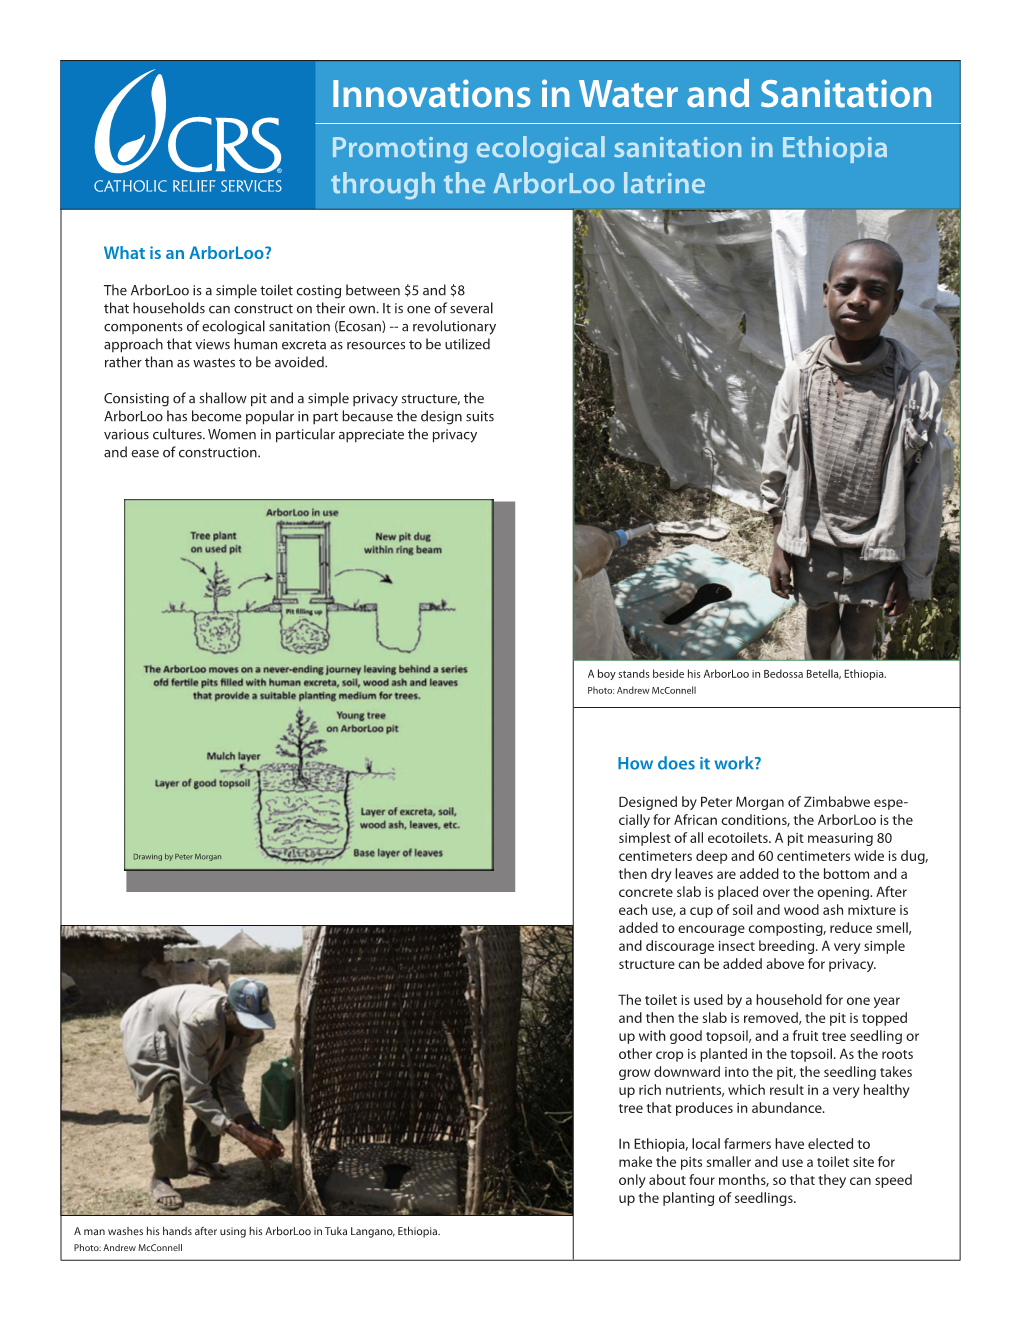 Promorint Ecological Sanitation in Ethiopia Through the Arborloo Latrine